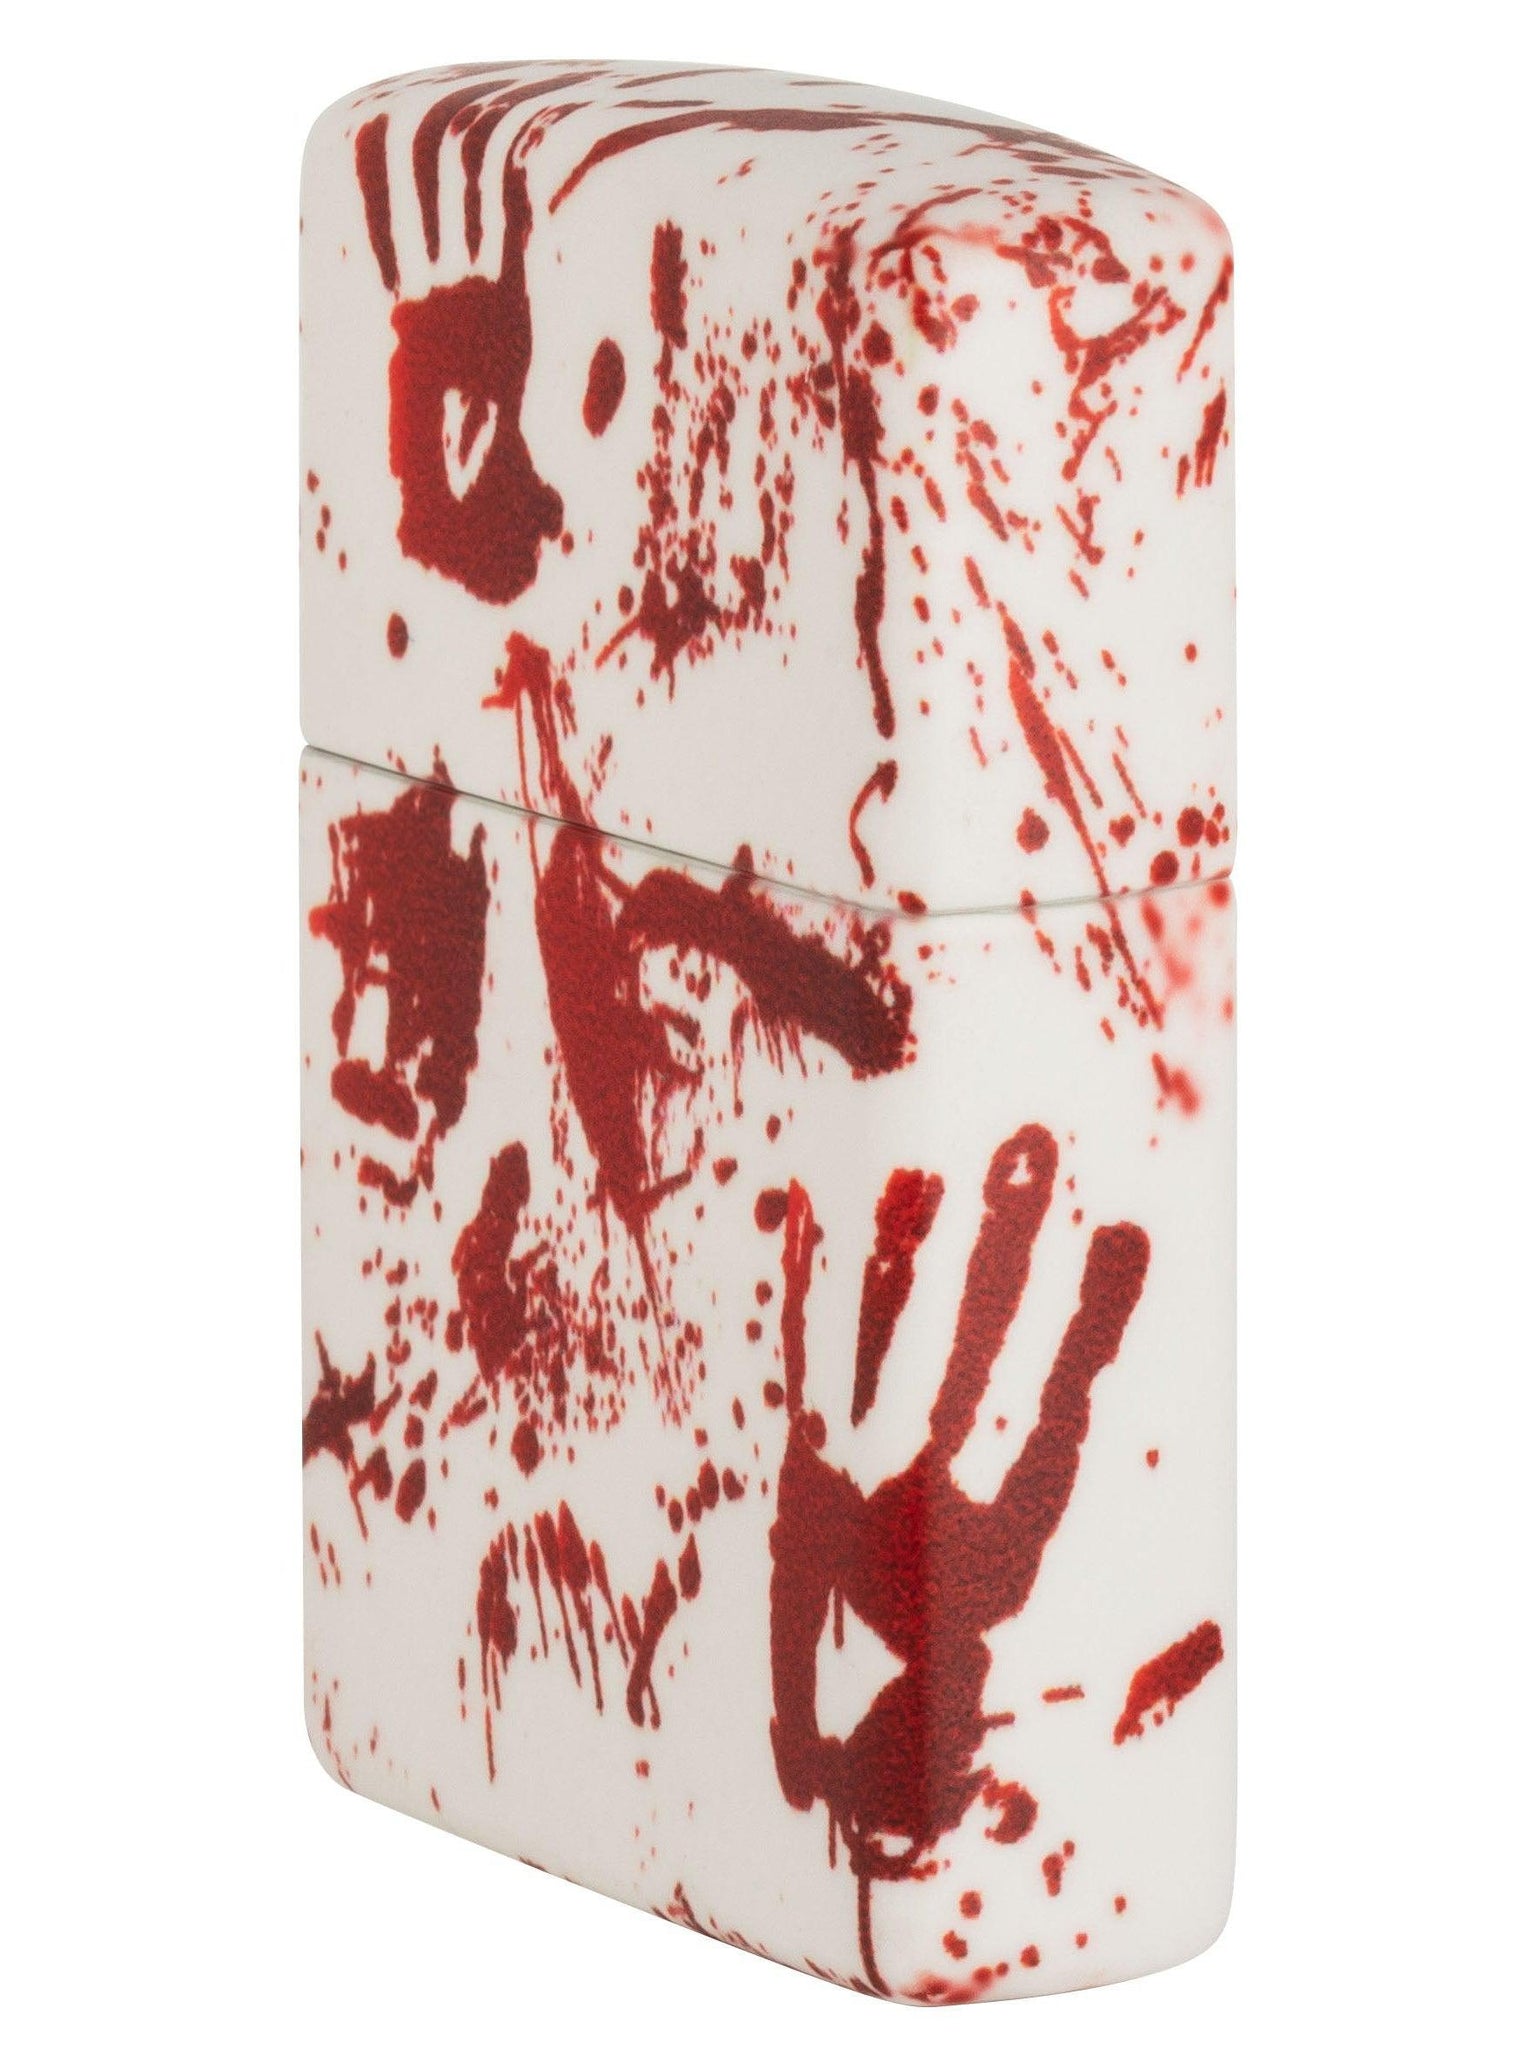 Zippo Lighter: Bloody Hand Prints, 540 Color - Matte 49808